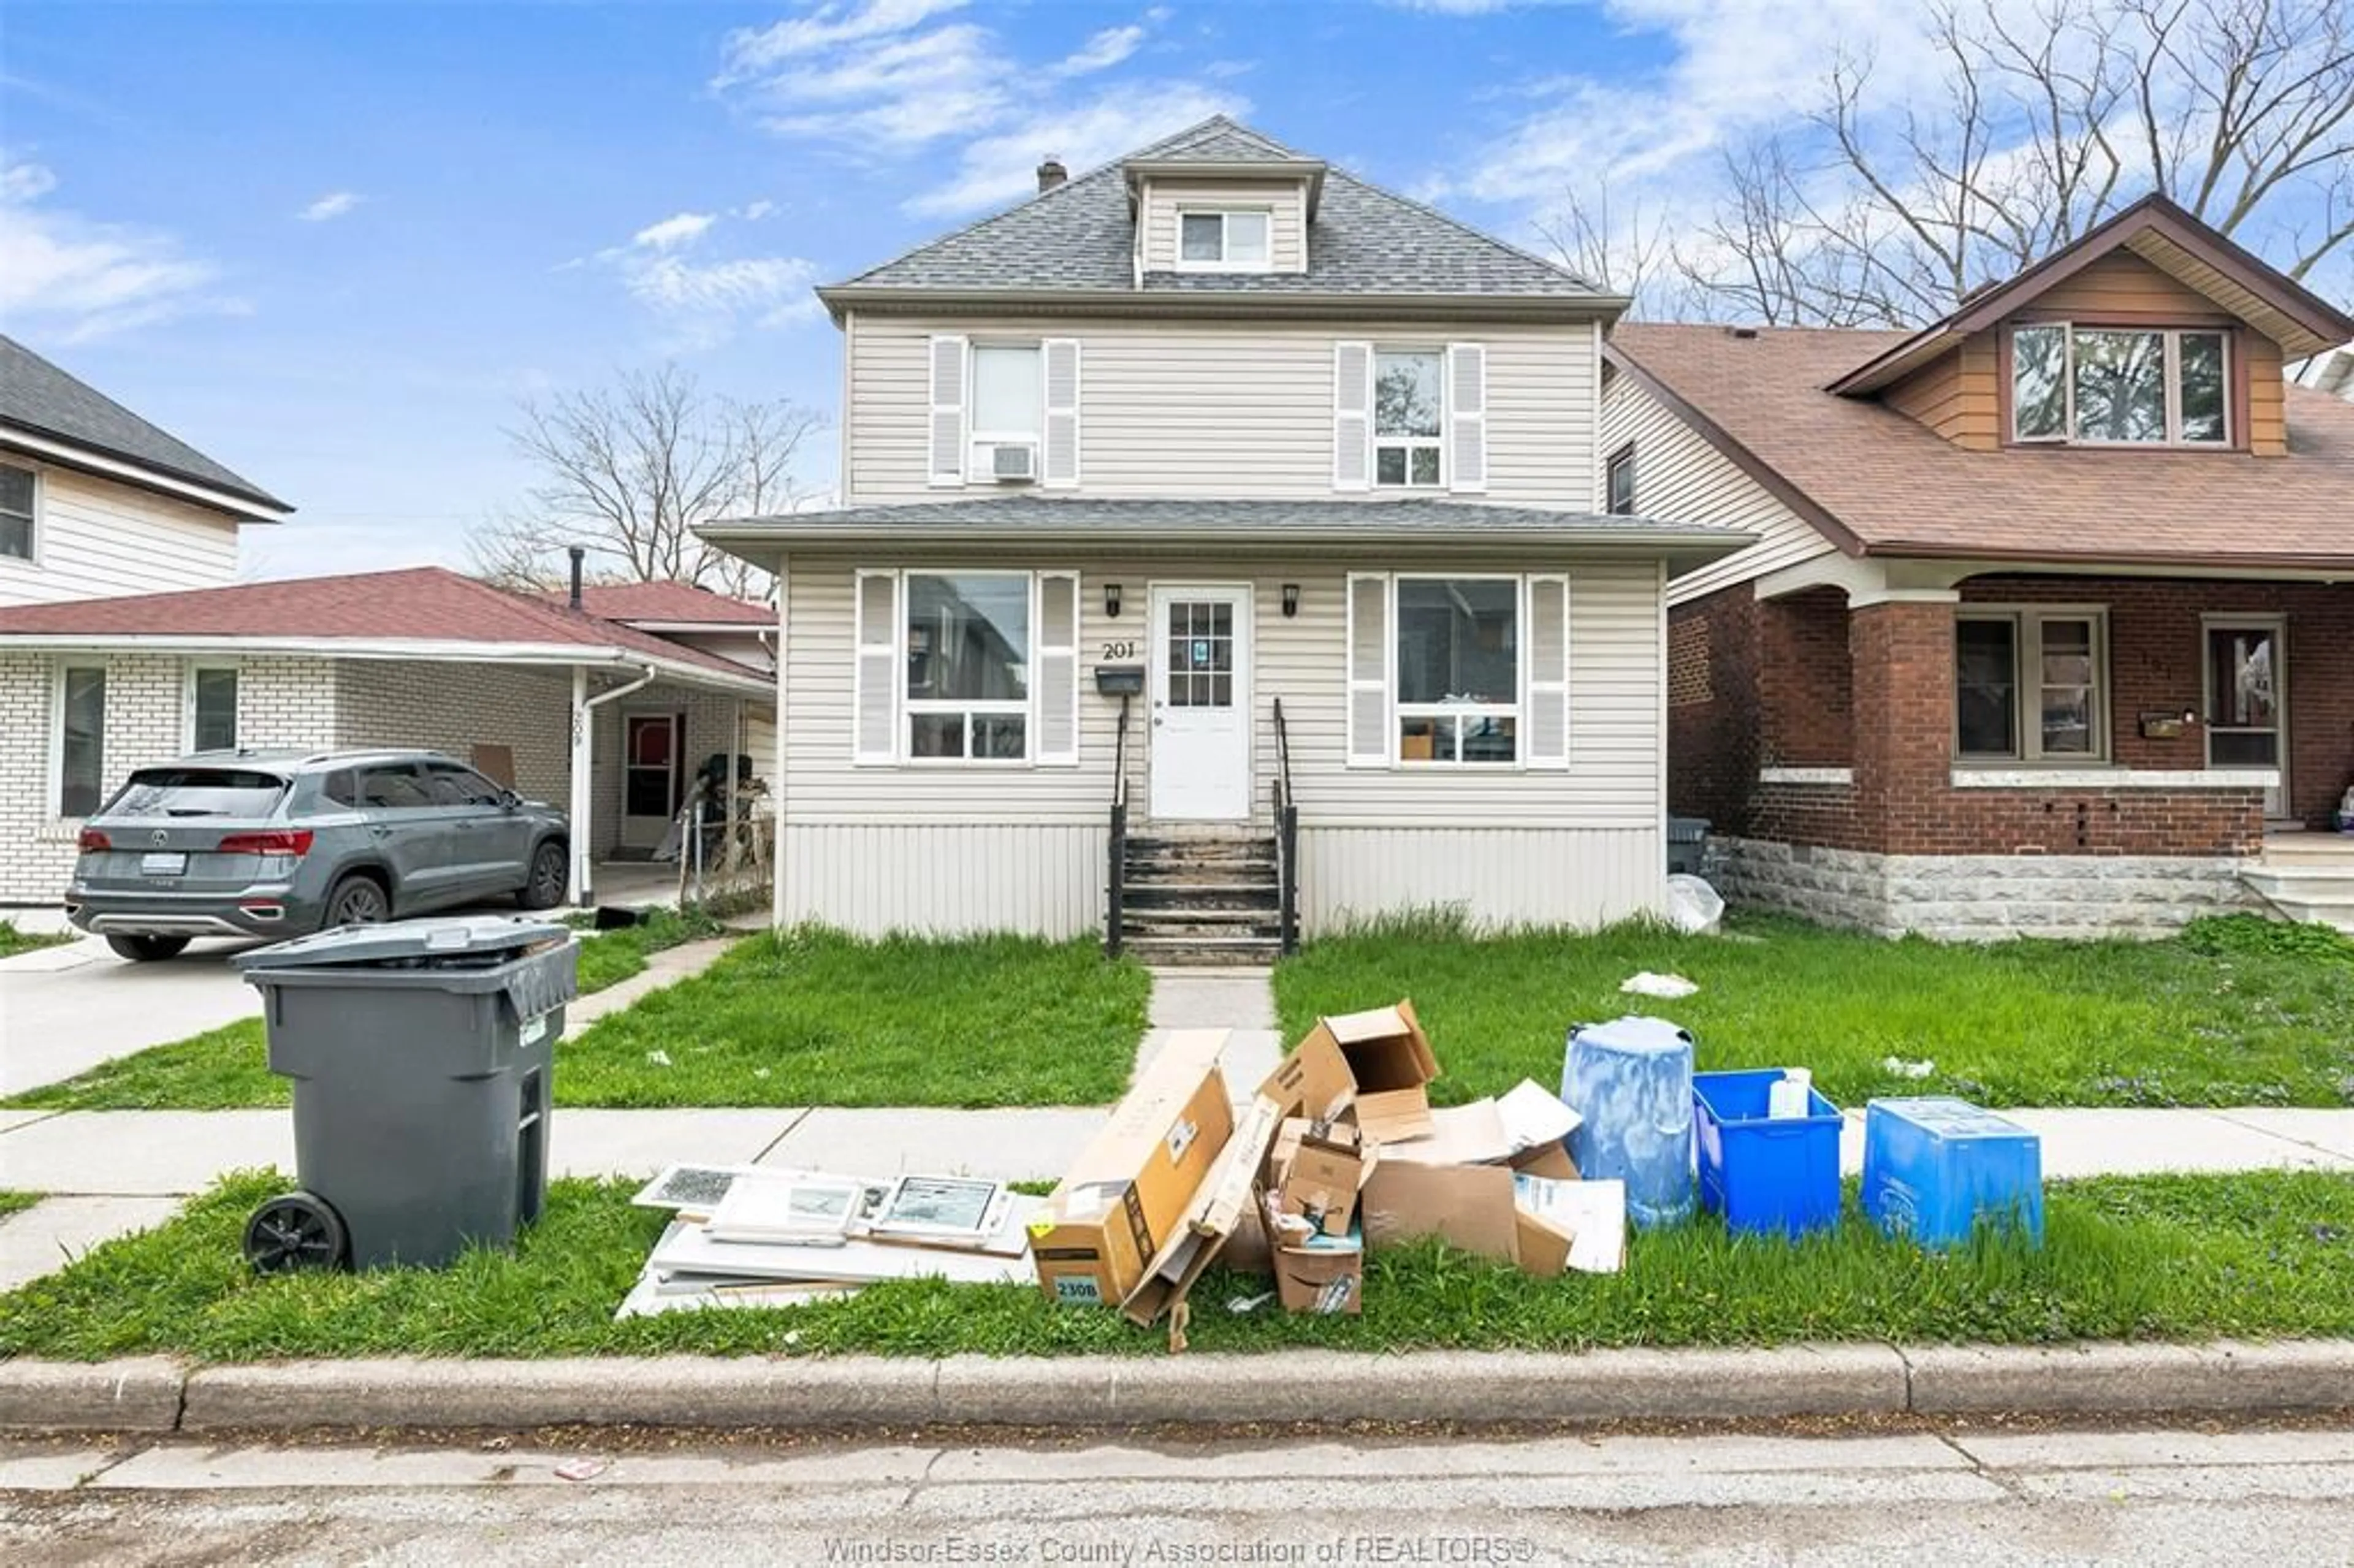 Frontside or backside of a home for 201 BRIDGE Ave, Windsor Ontario N9B 2M1